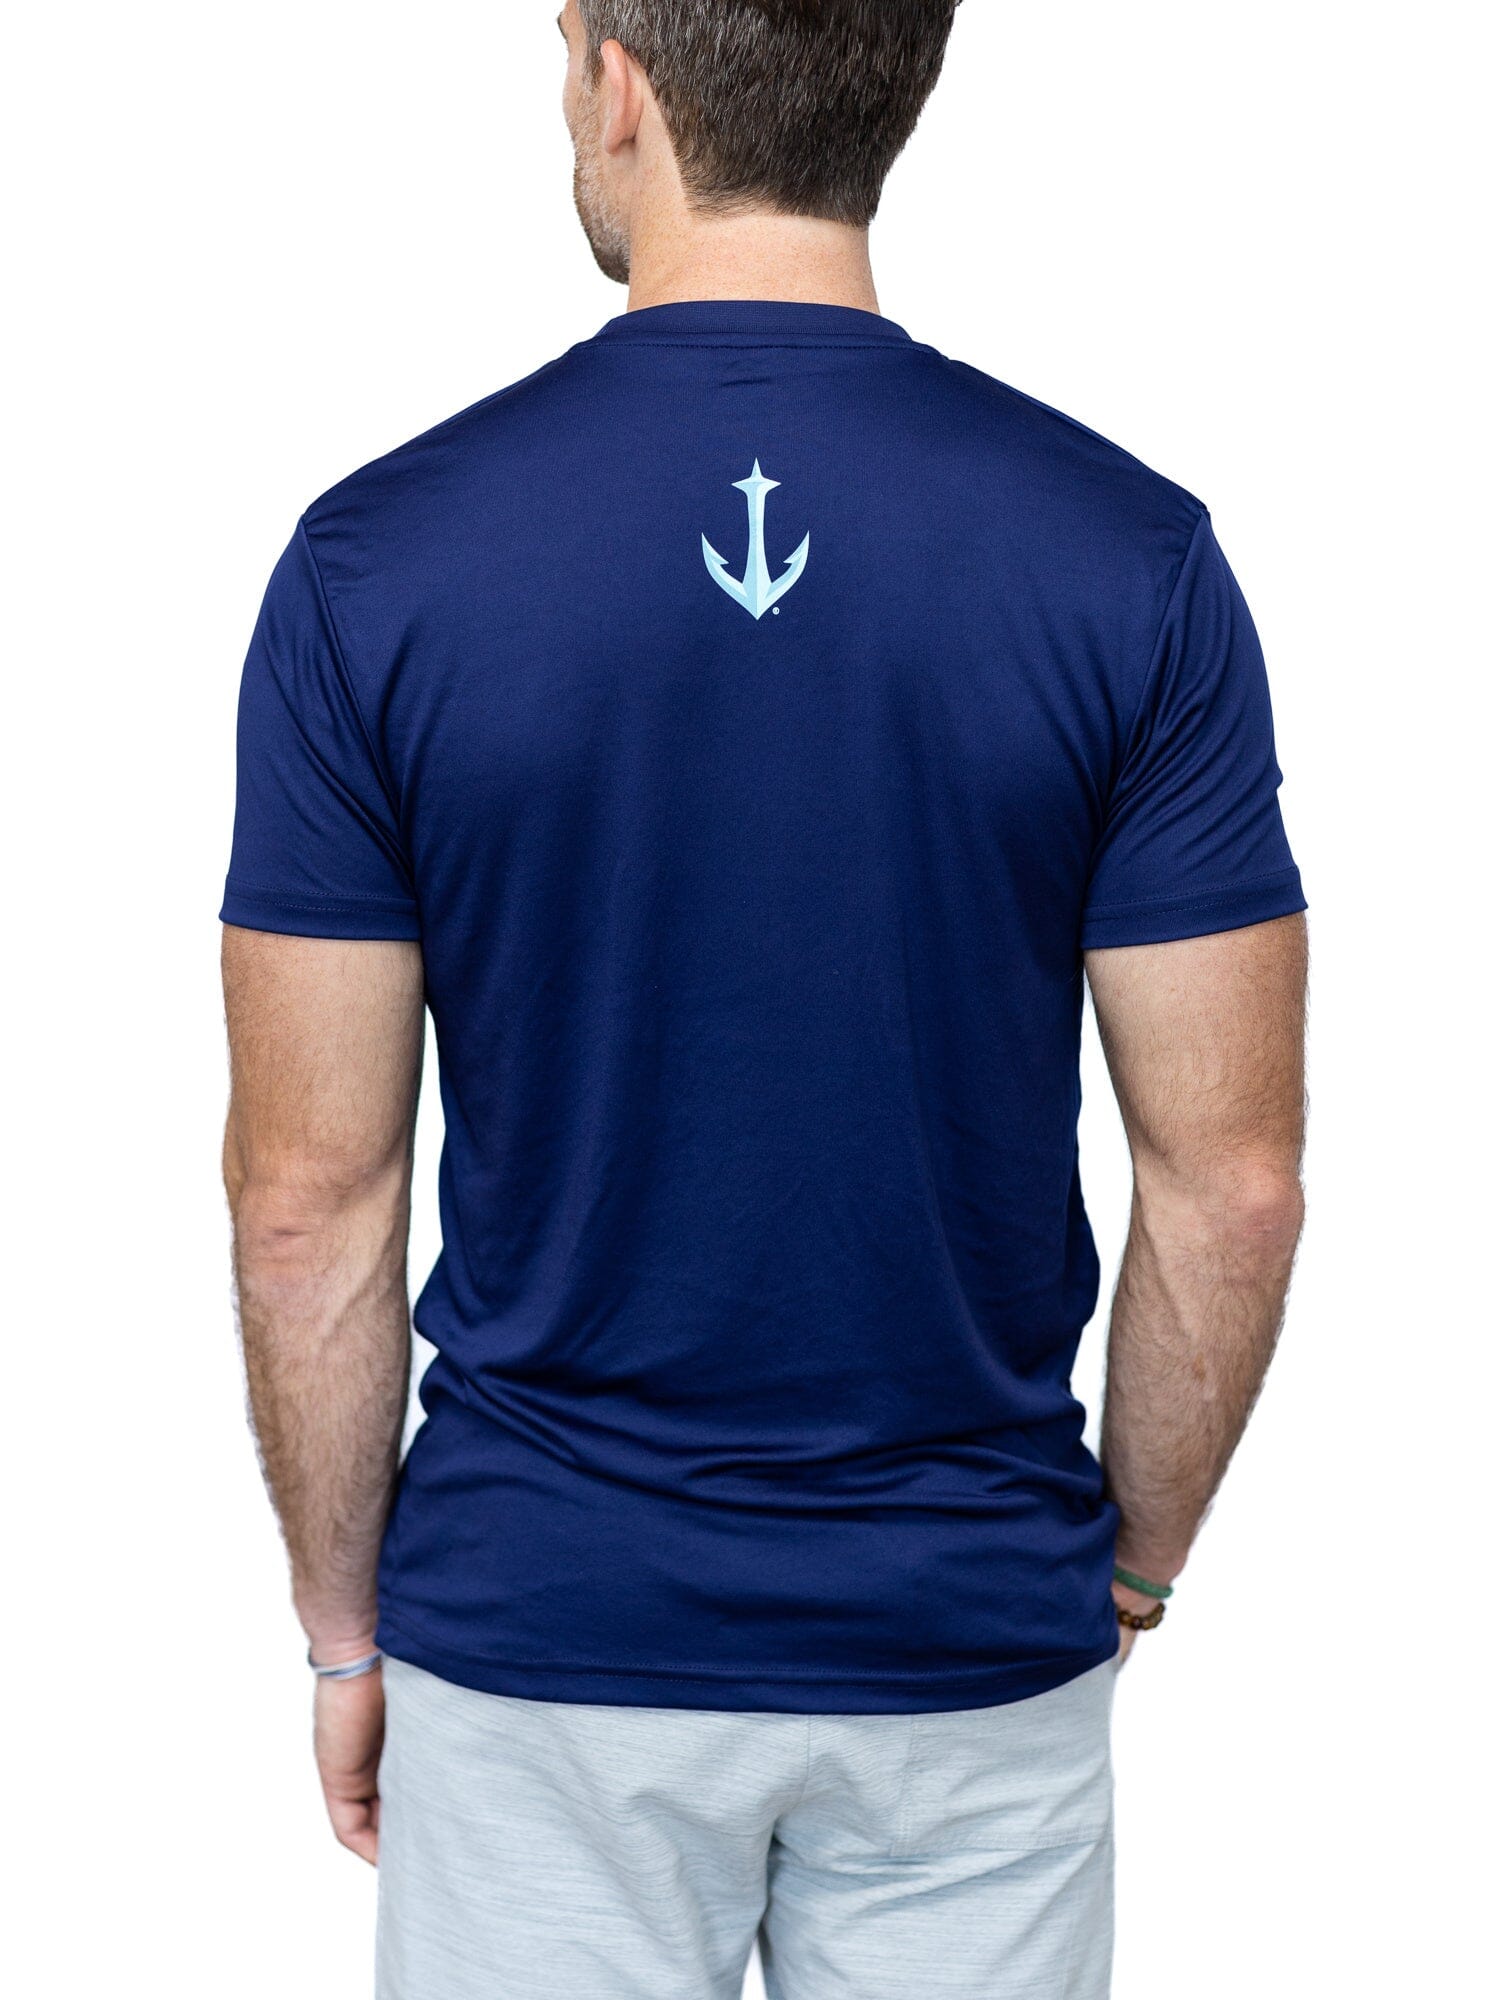 Bench Clearers Seattle Kraken Full Fandom Moisture Wicking T-Shirt - S / Blue / Polyester